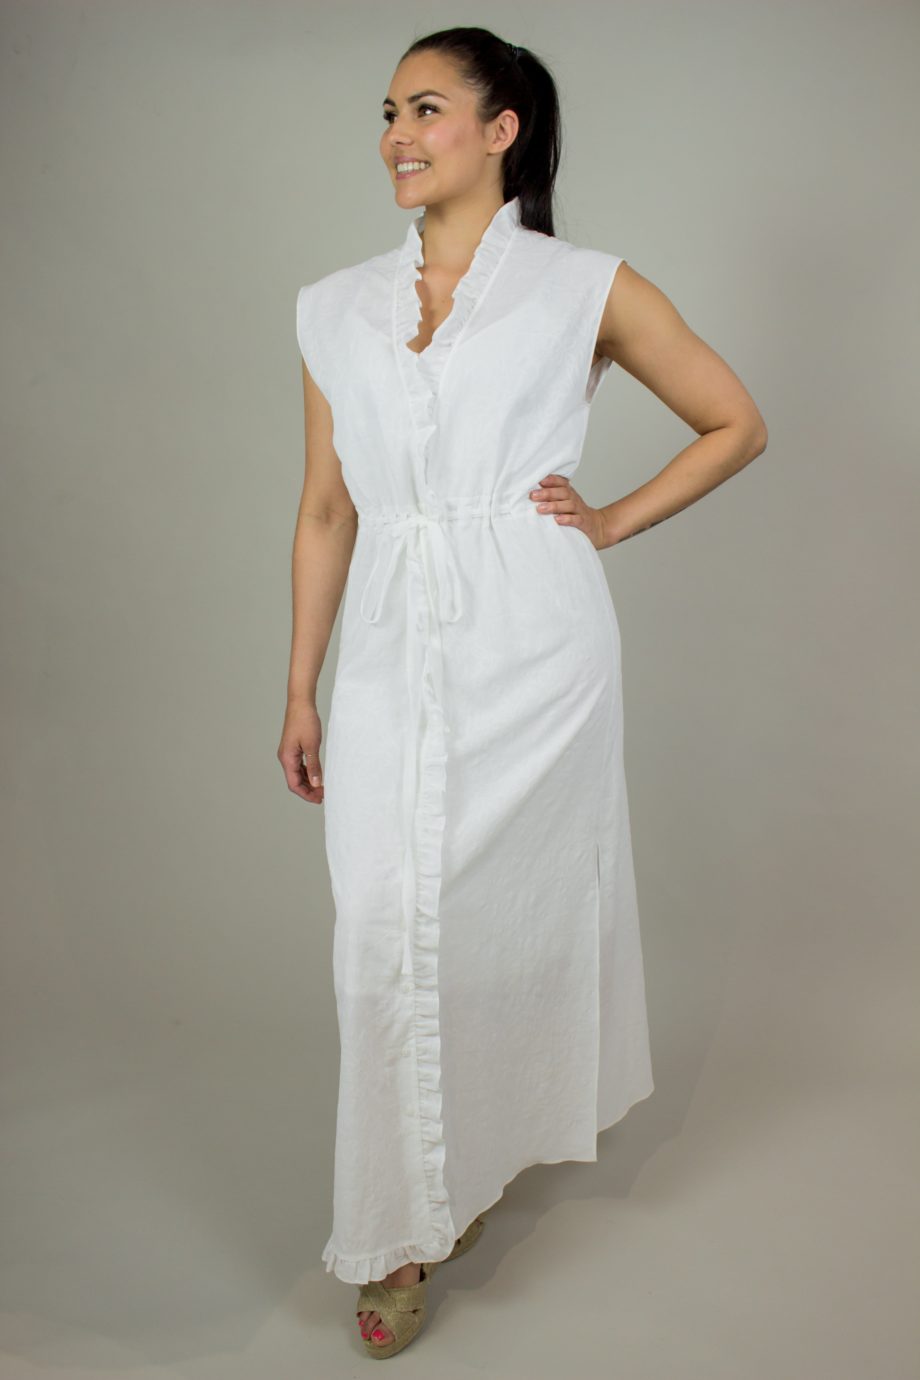 8. KRISTINA TI White long dress